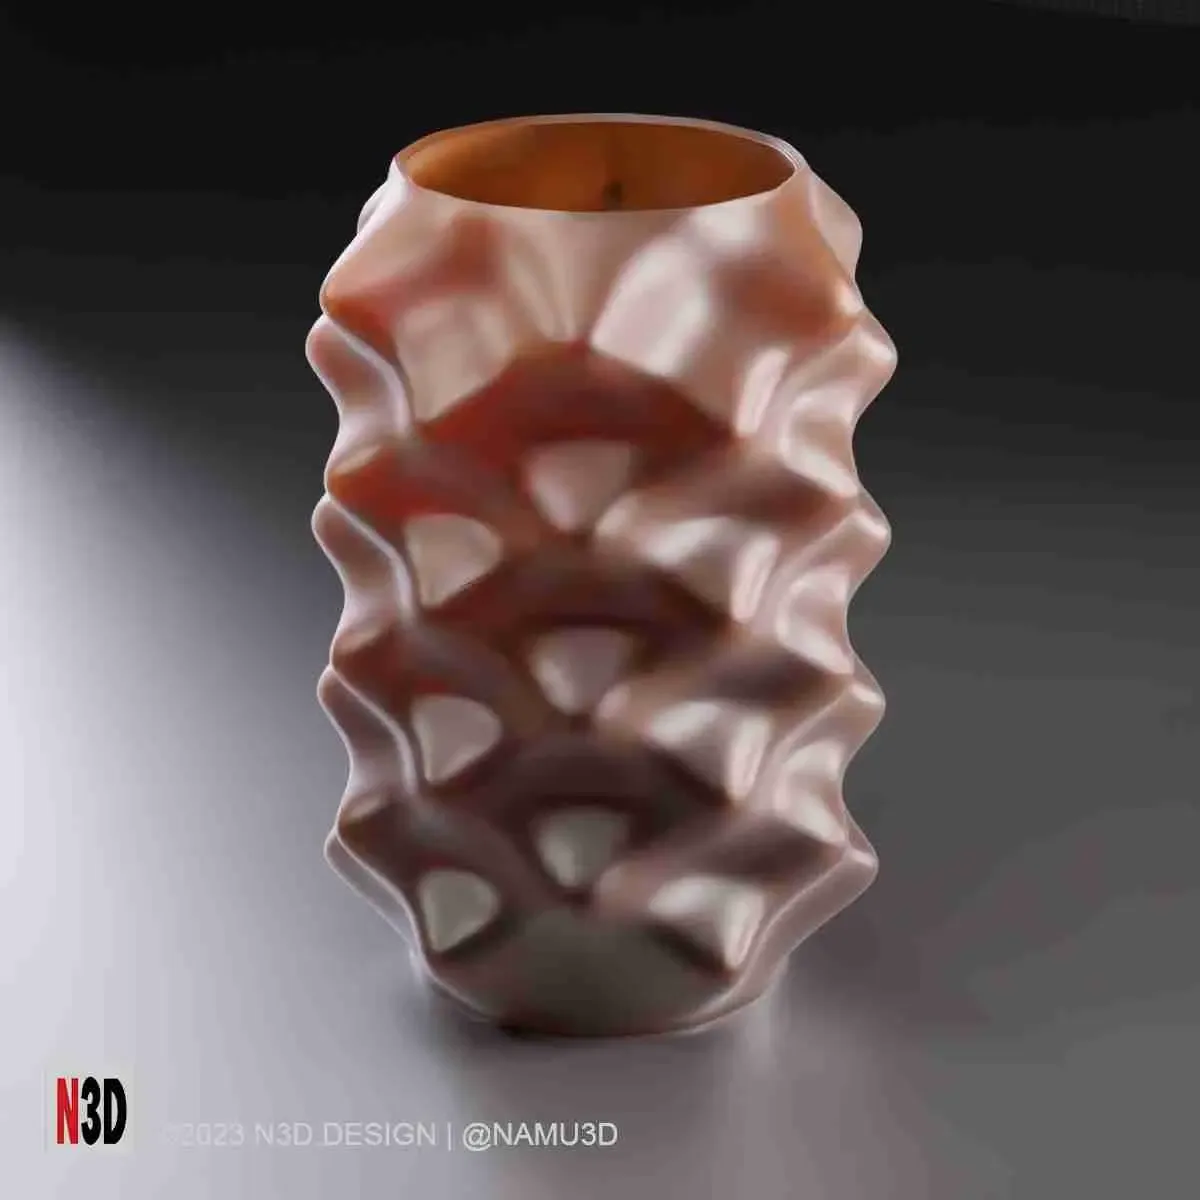 Vase 0036 - Bumpy vase